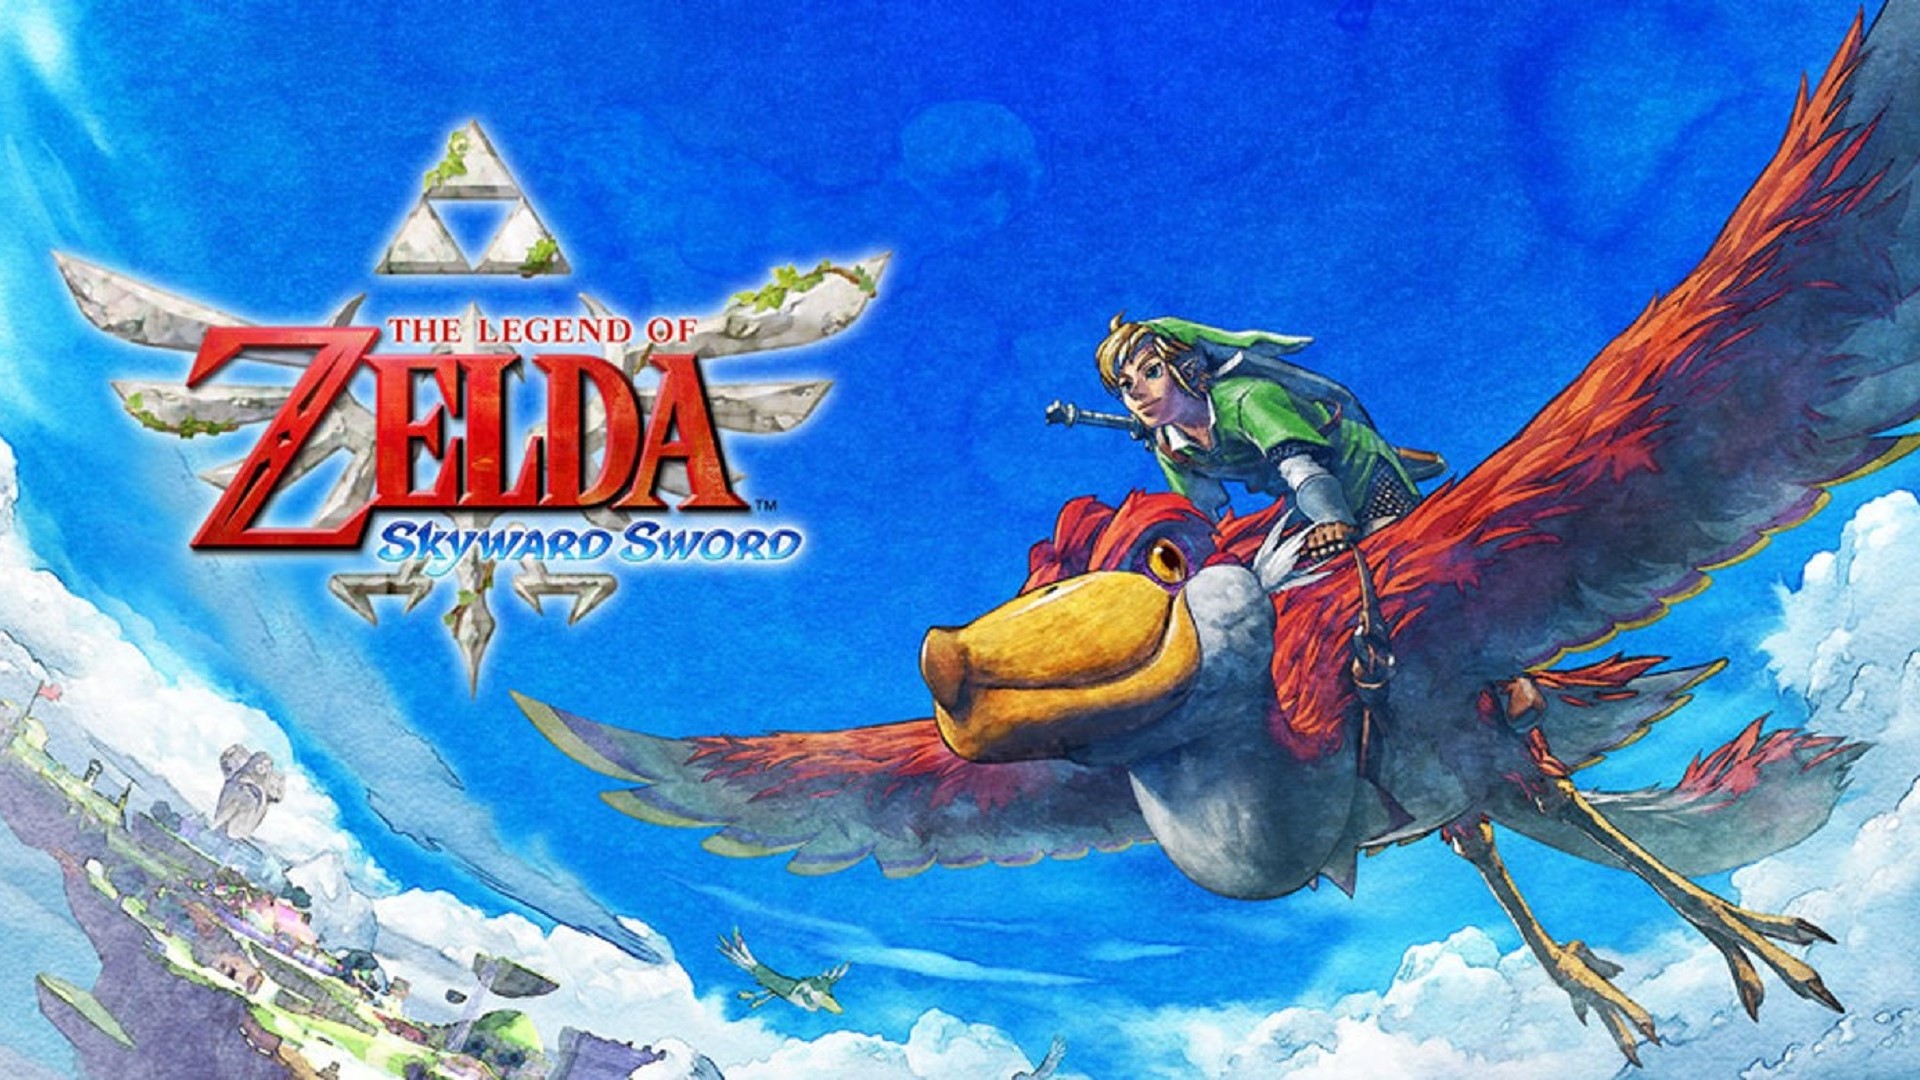 Espada Skyward The Legend of Zelda